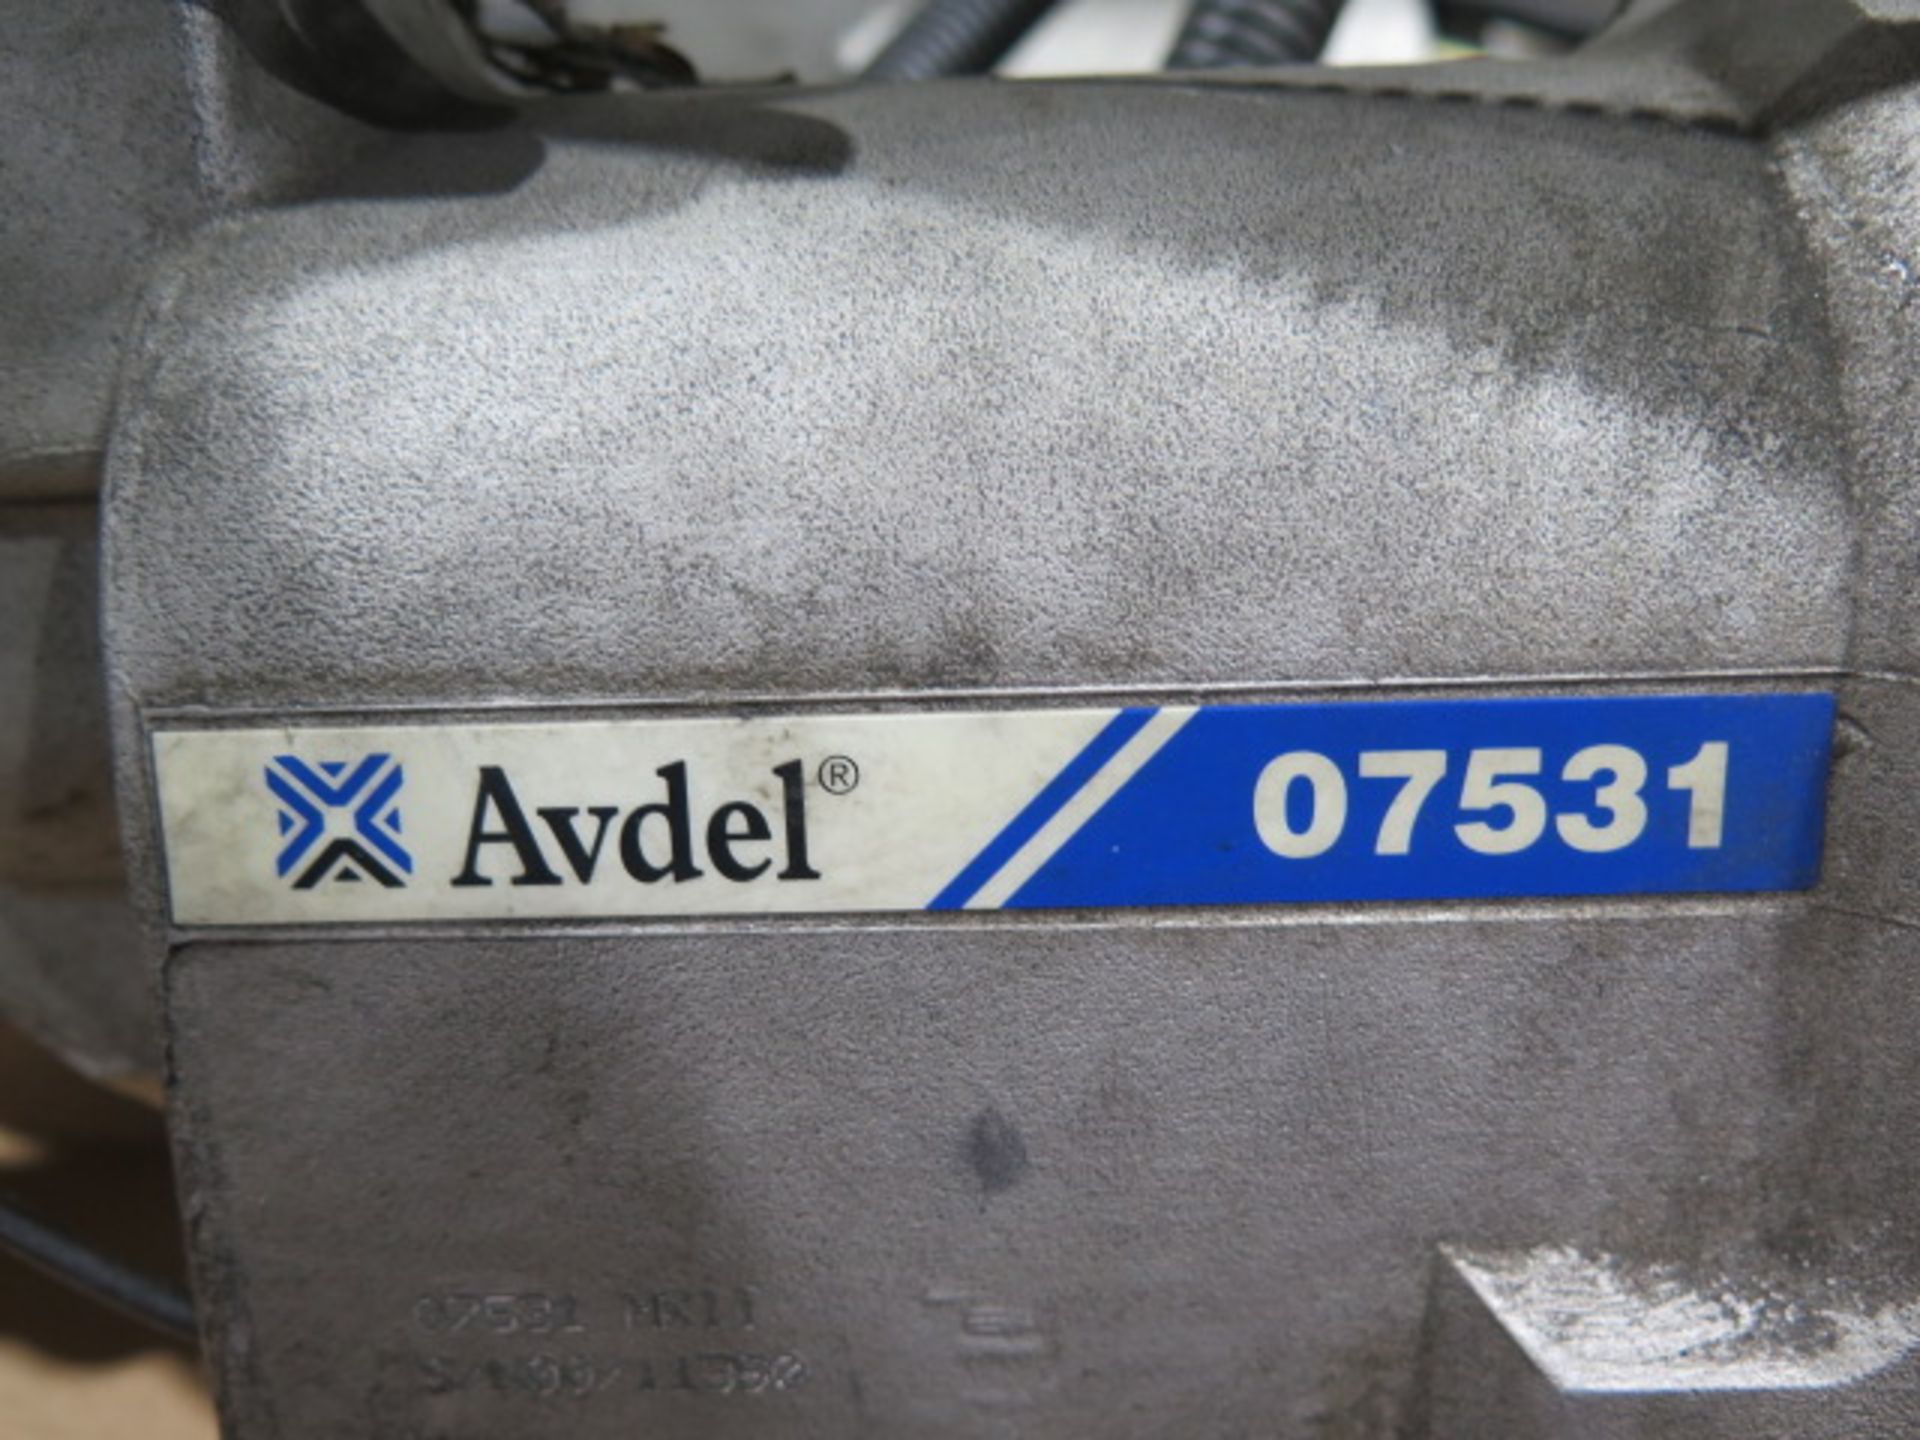 Avdel mdl. 07531 Hydropneumatic Riveter - Image 3 of 3